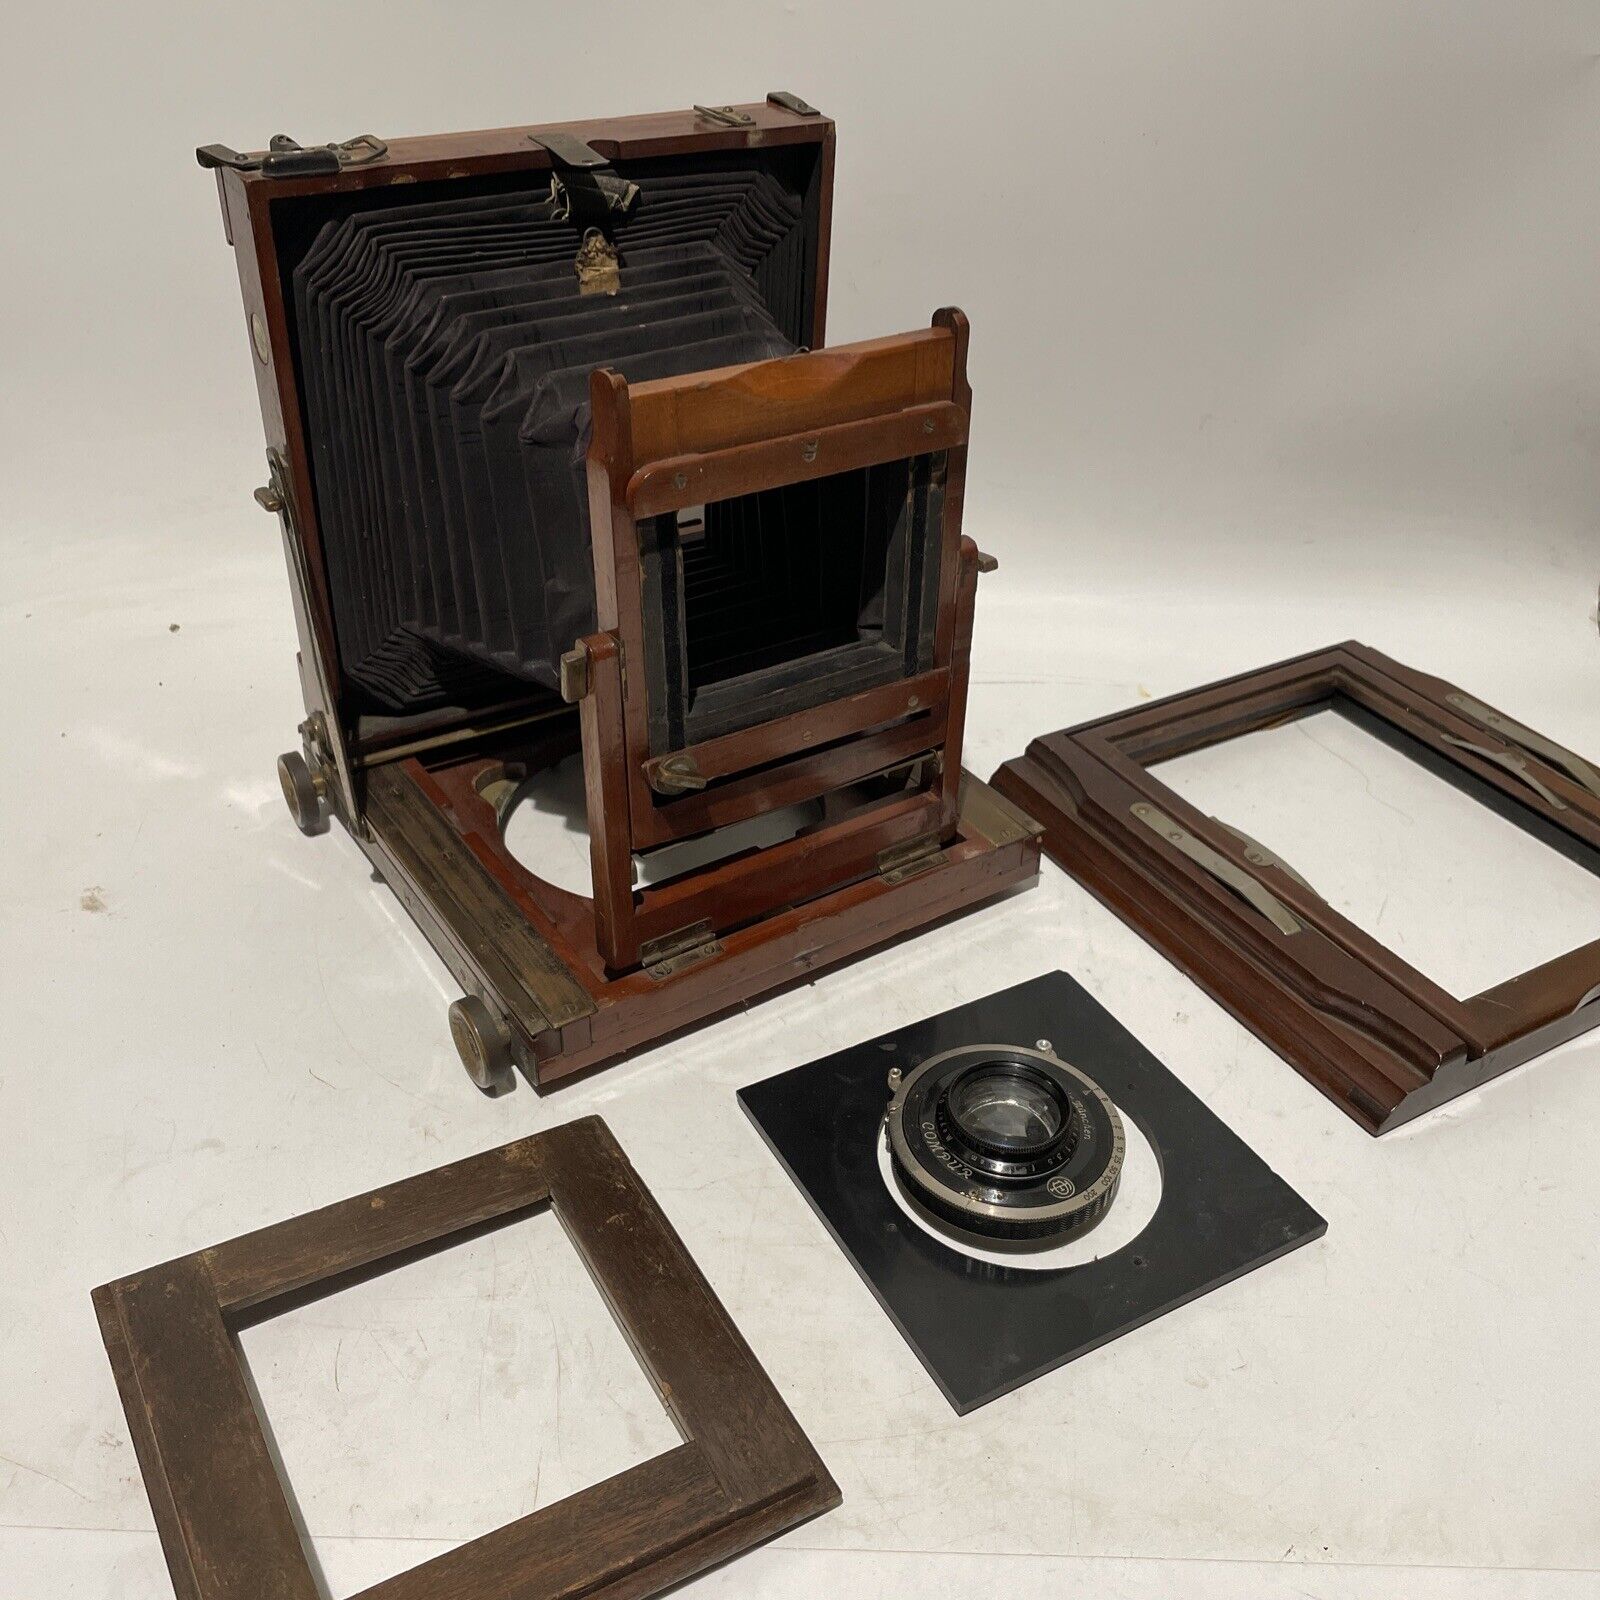 Thornton-pickard Imperial Triple Extension Camera F Deckel-munchen Compur Lens